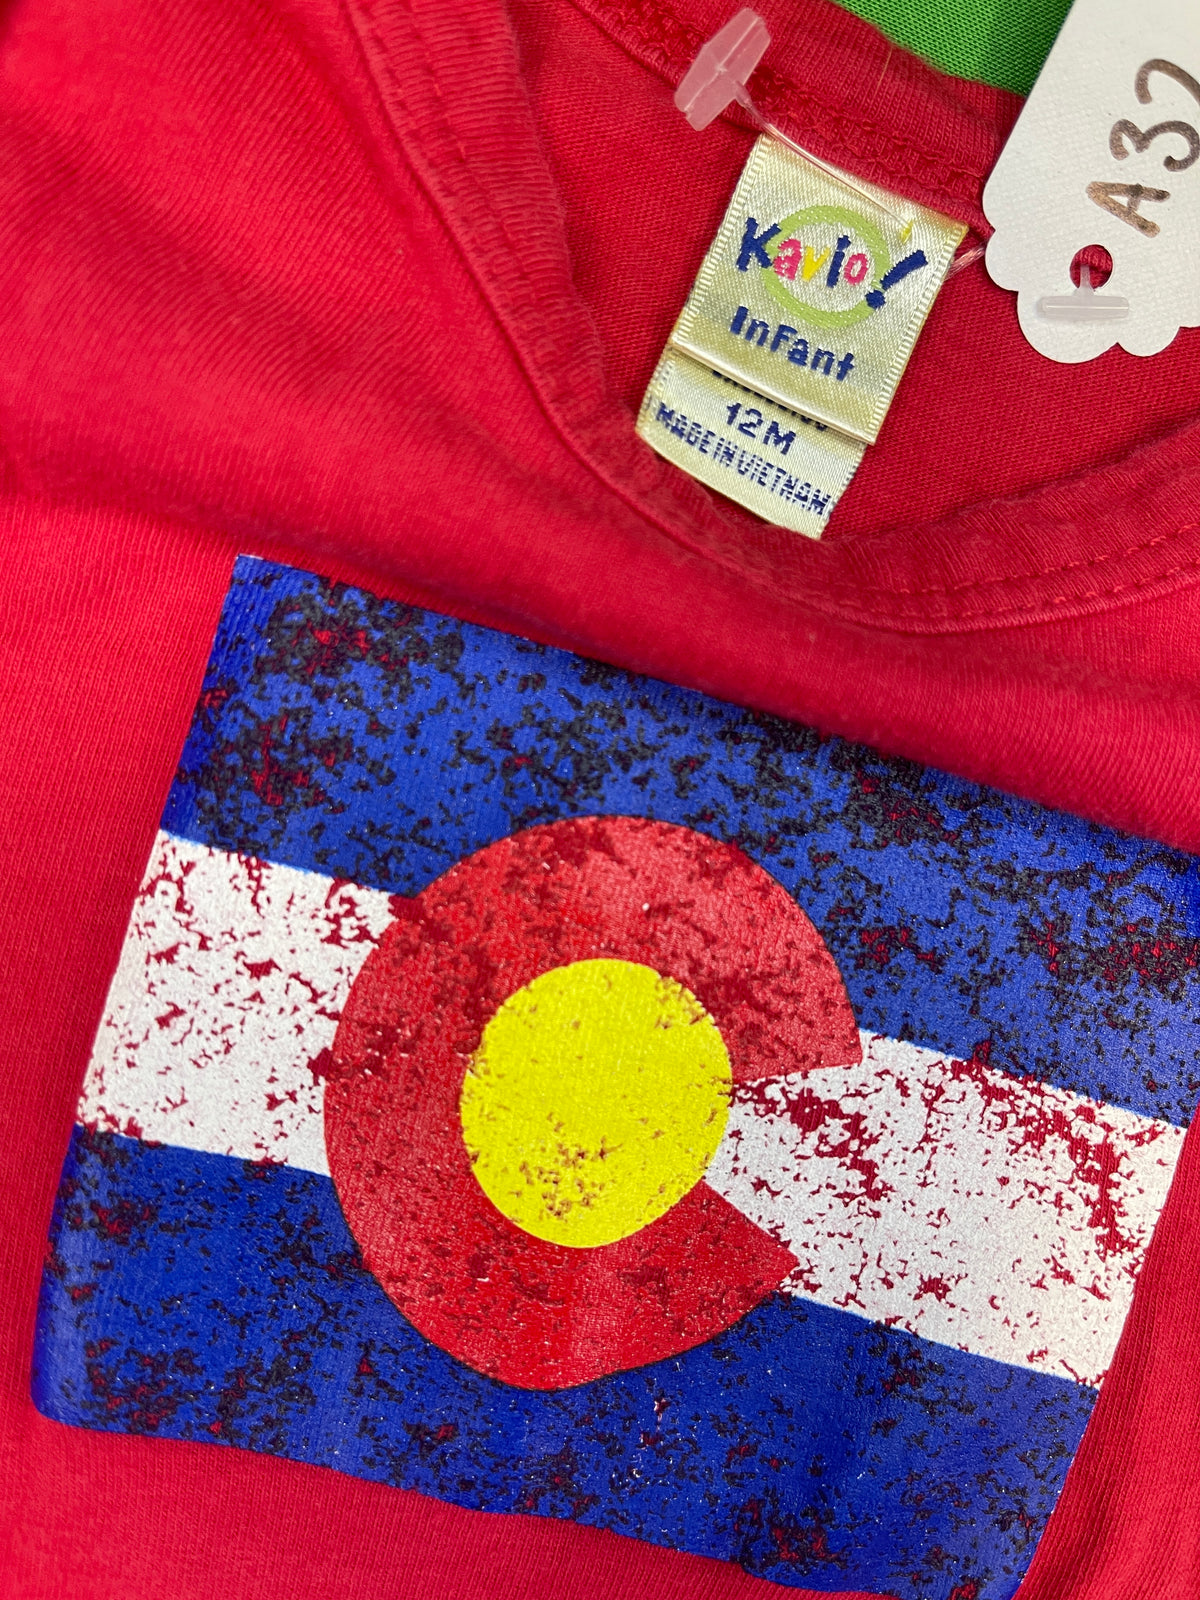 Colorado State Flag Red 100% Cotton Bodysuit/Vest Infant Baby 12 Months